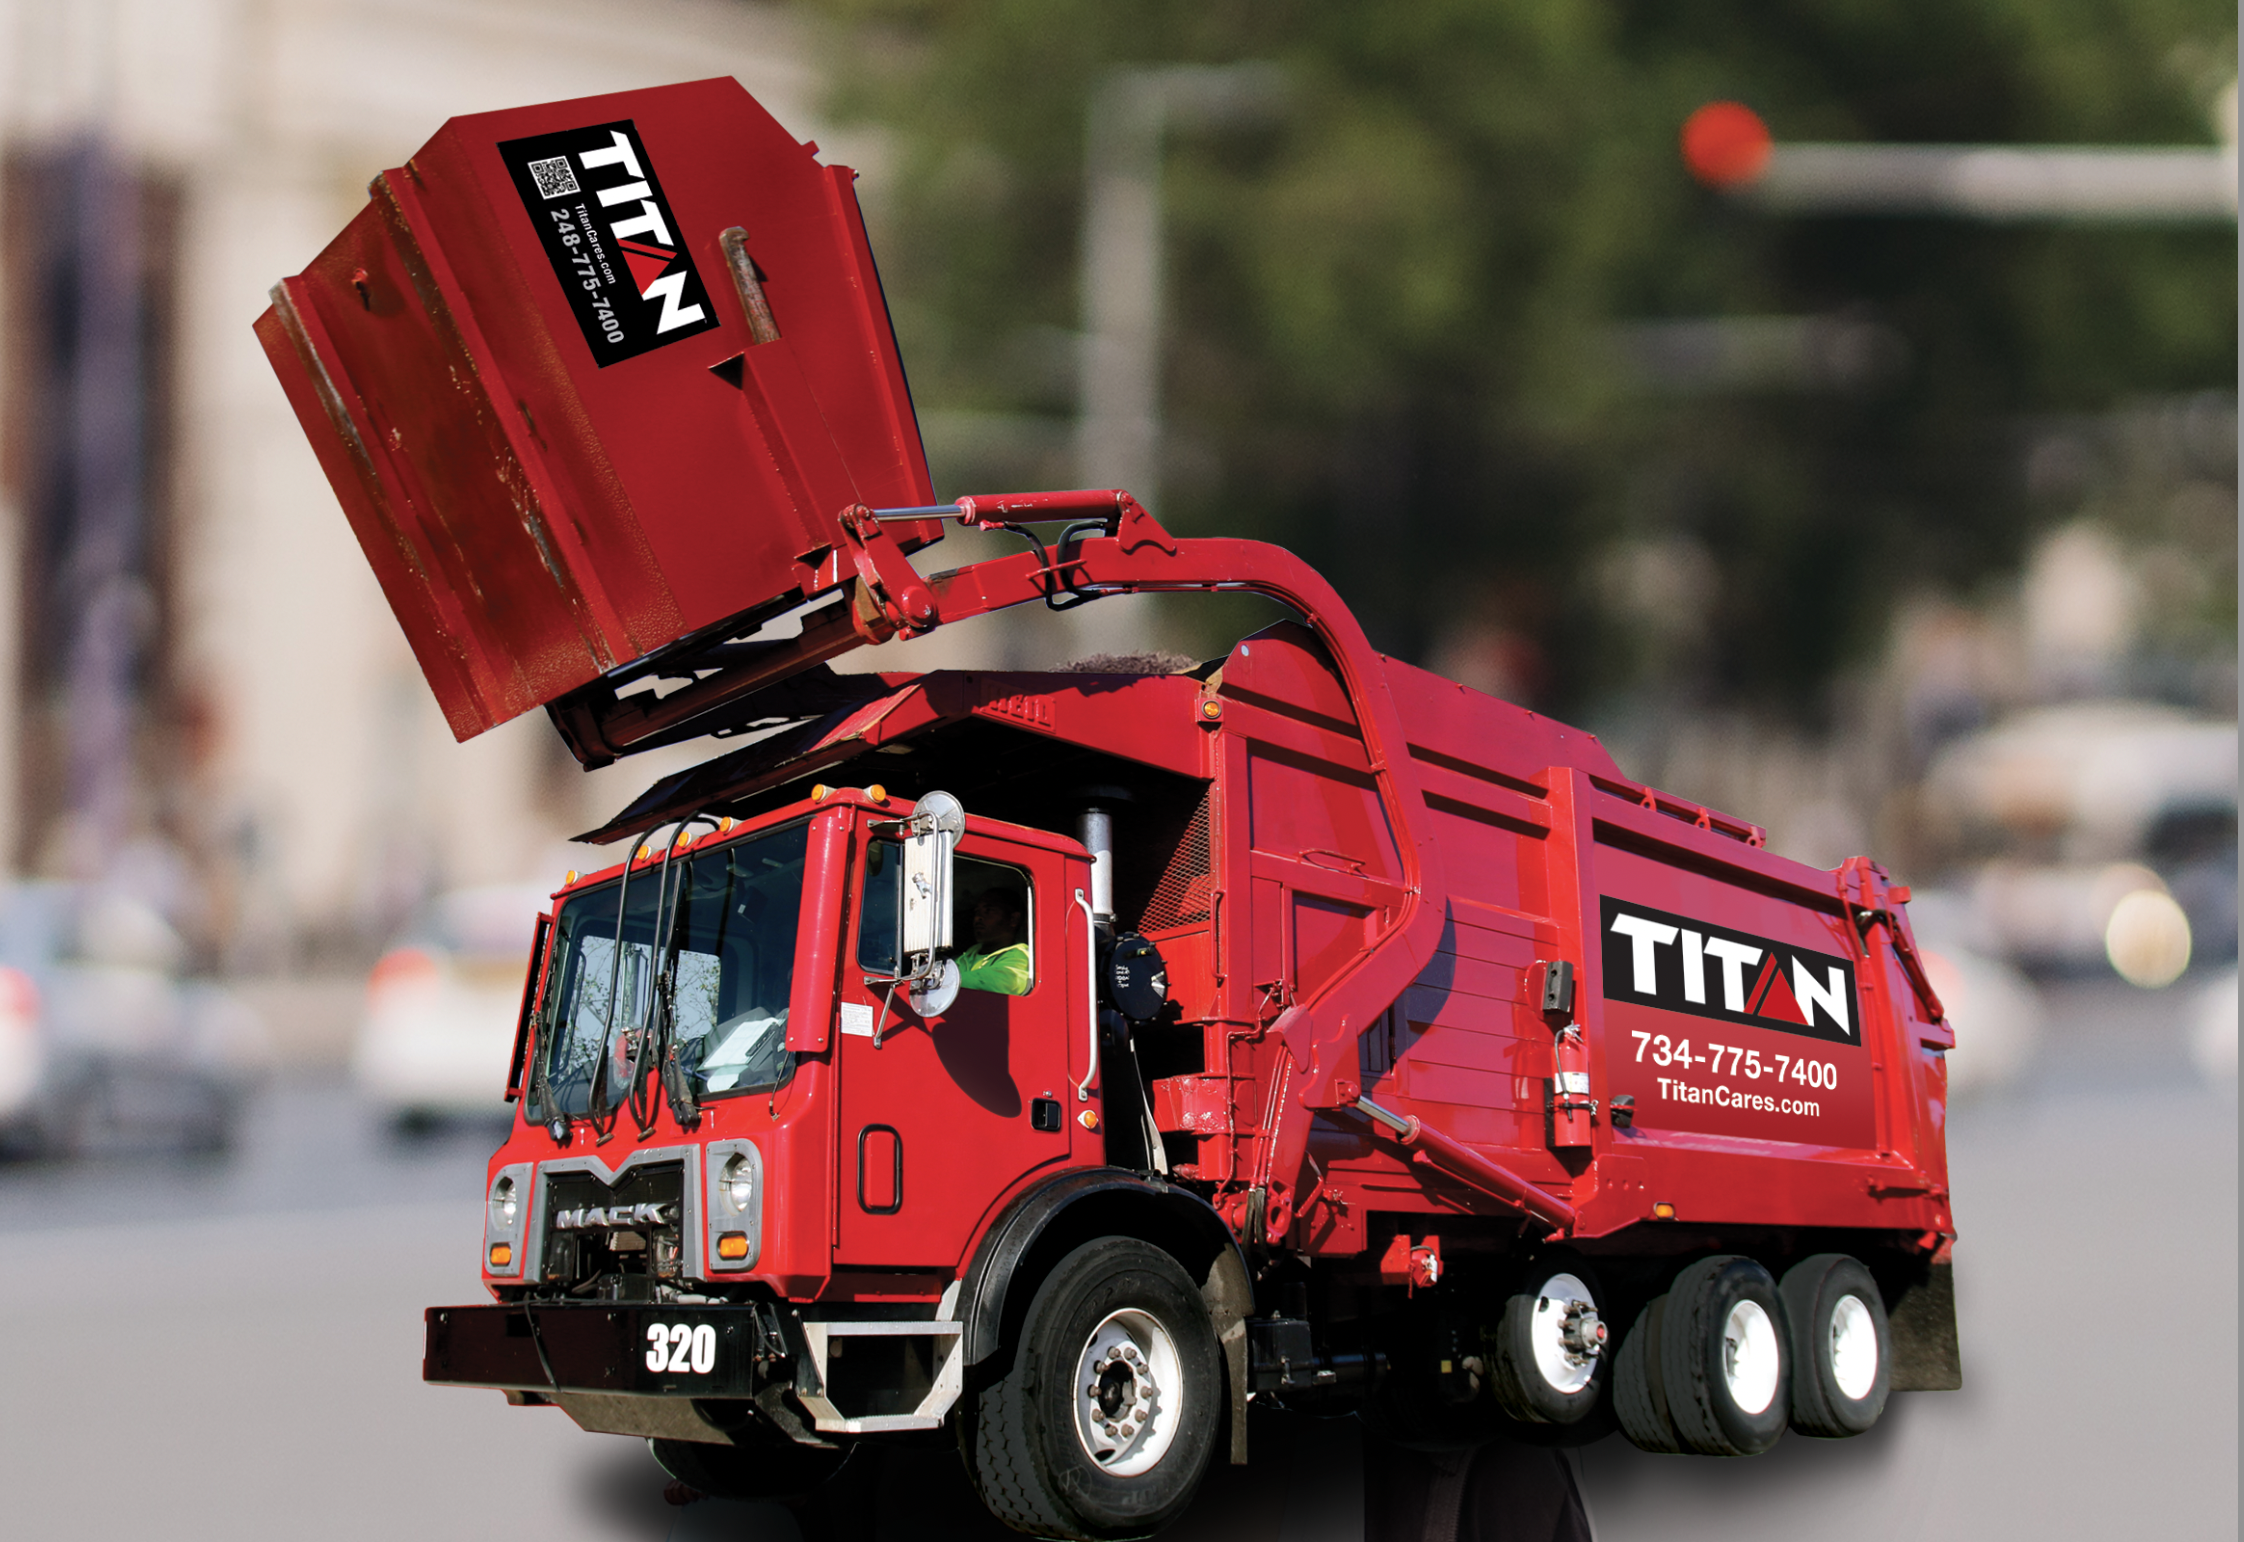 Titan Front Loader Residential Garbage Truck.